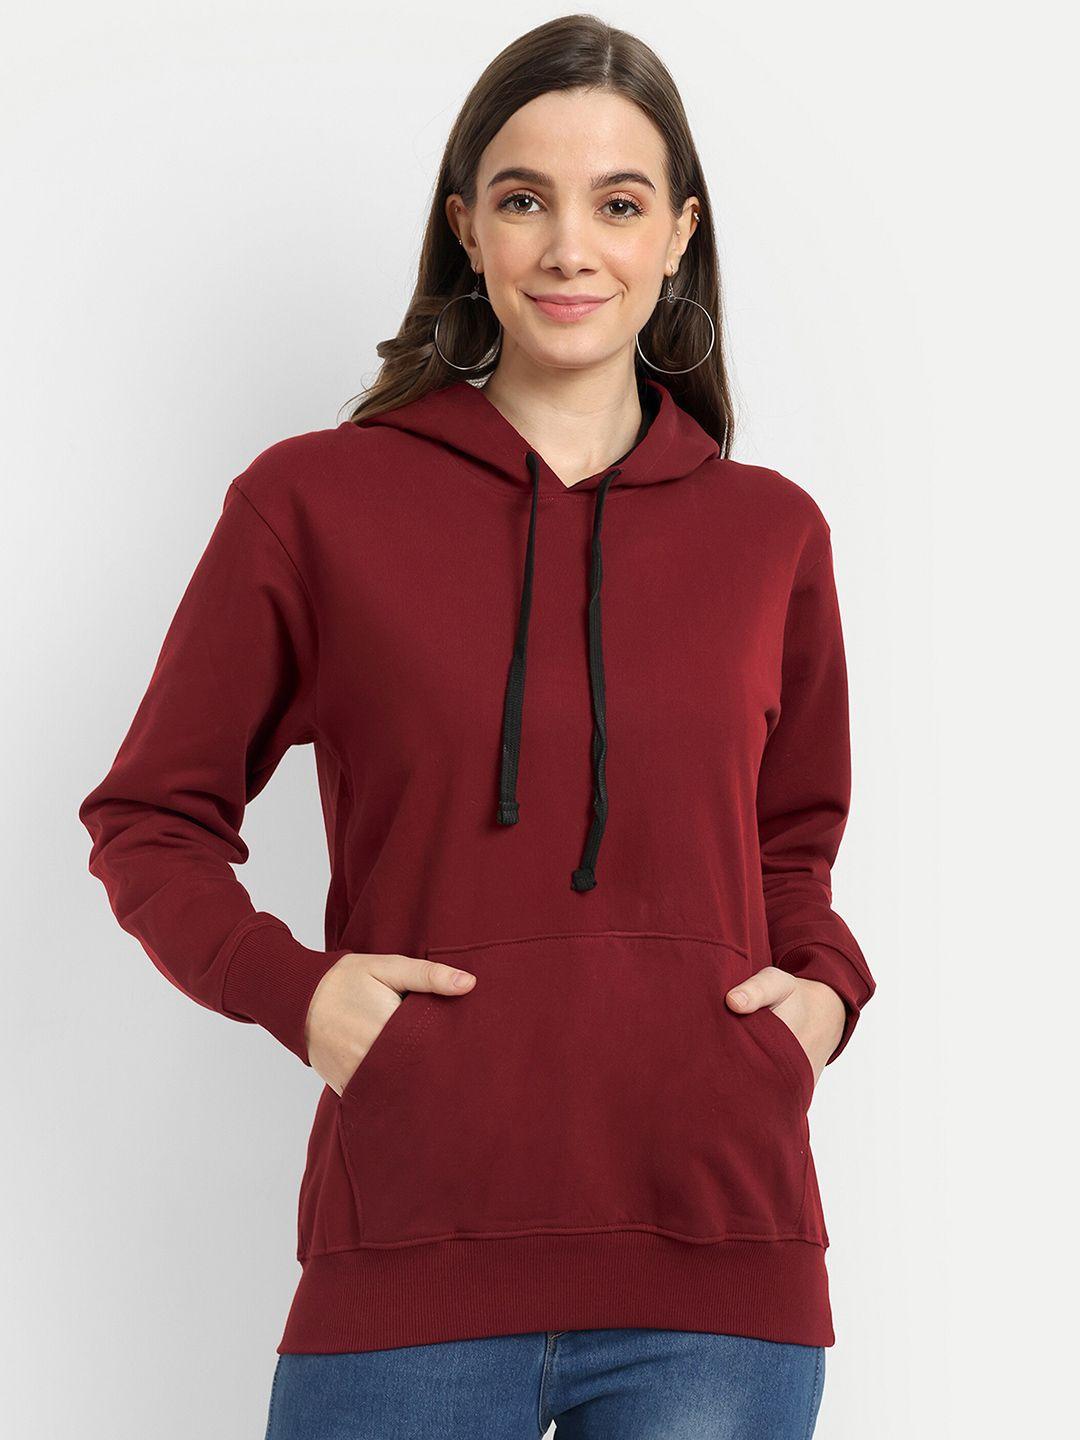 bloopers store hooded cotton sweatshirt